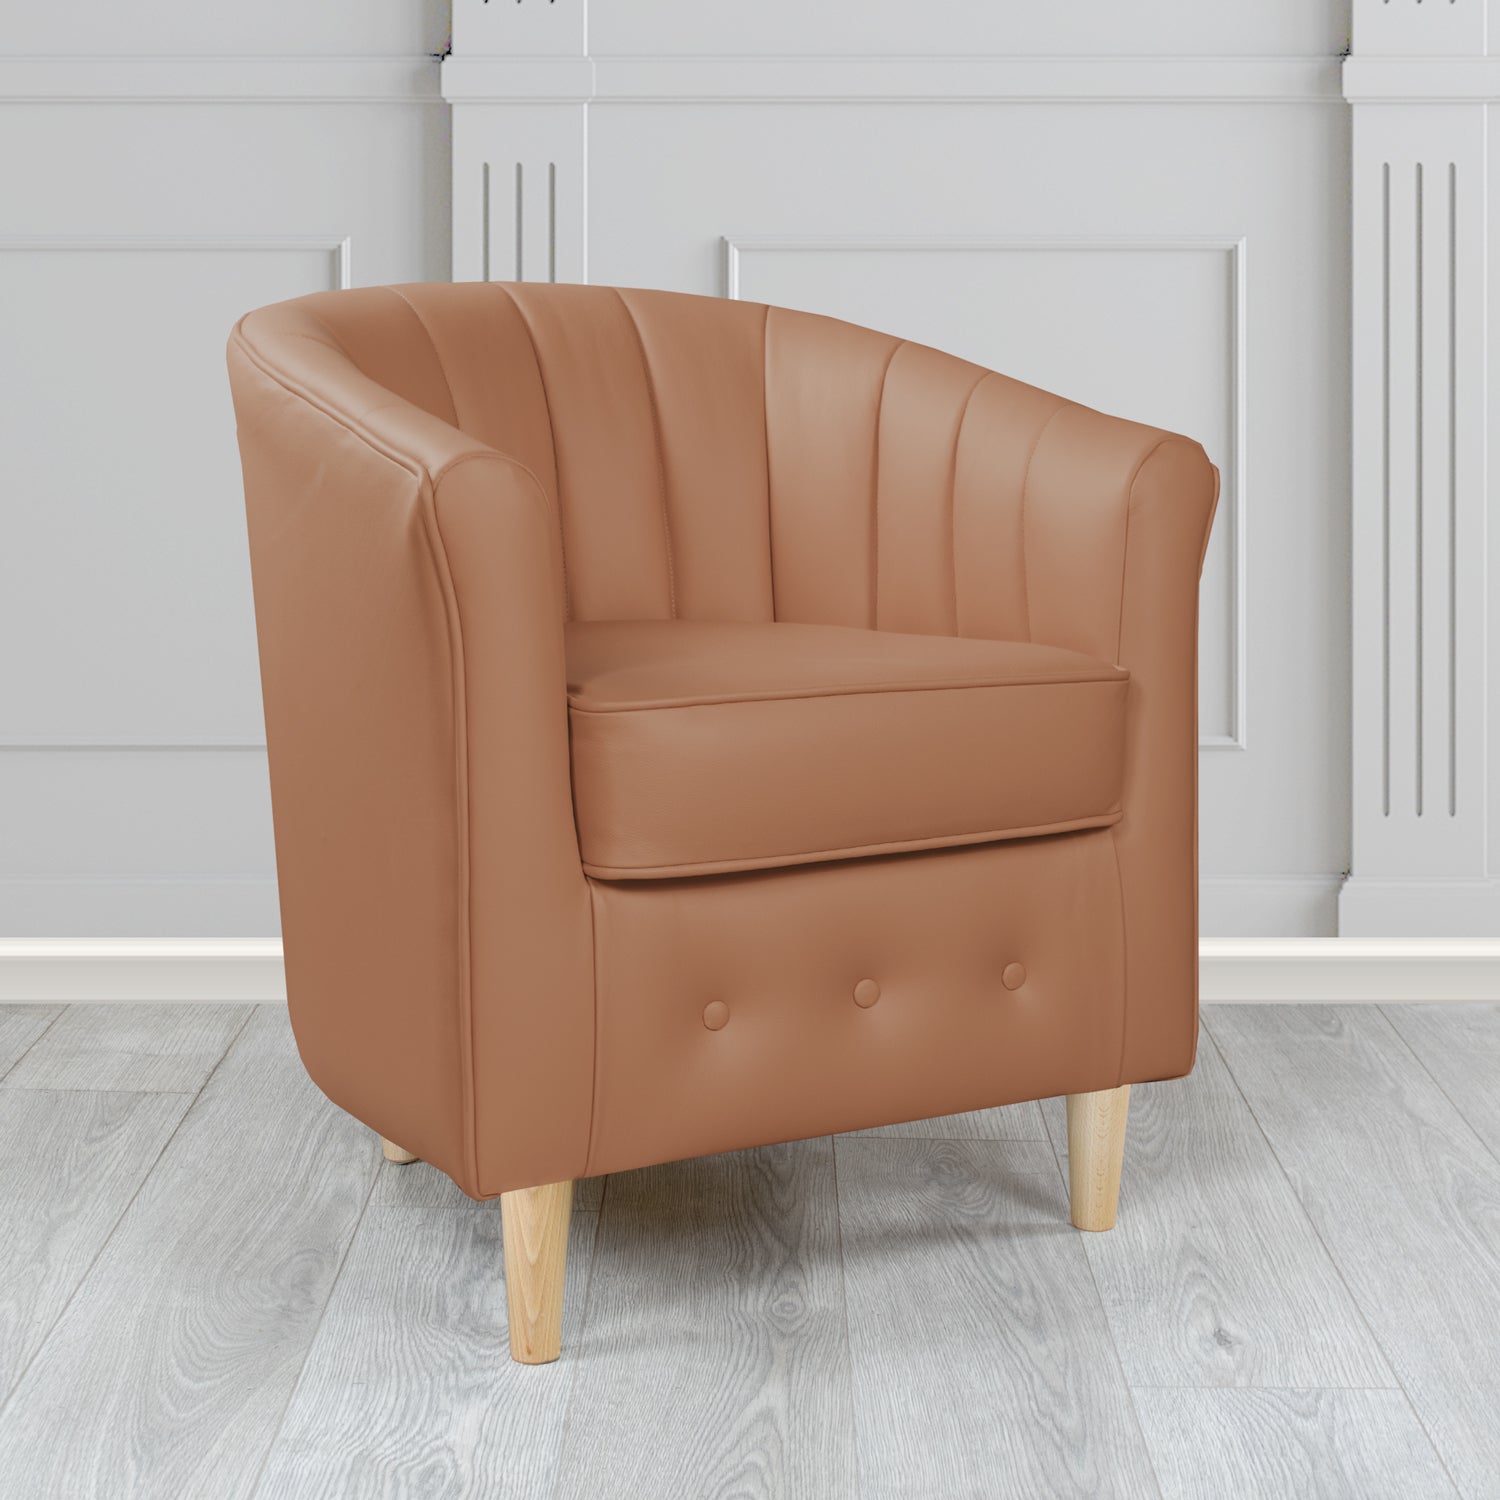 Doha Tub Chair in Vele Copper Brown Crib 5 Genuine Leather